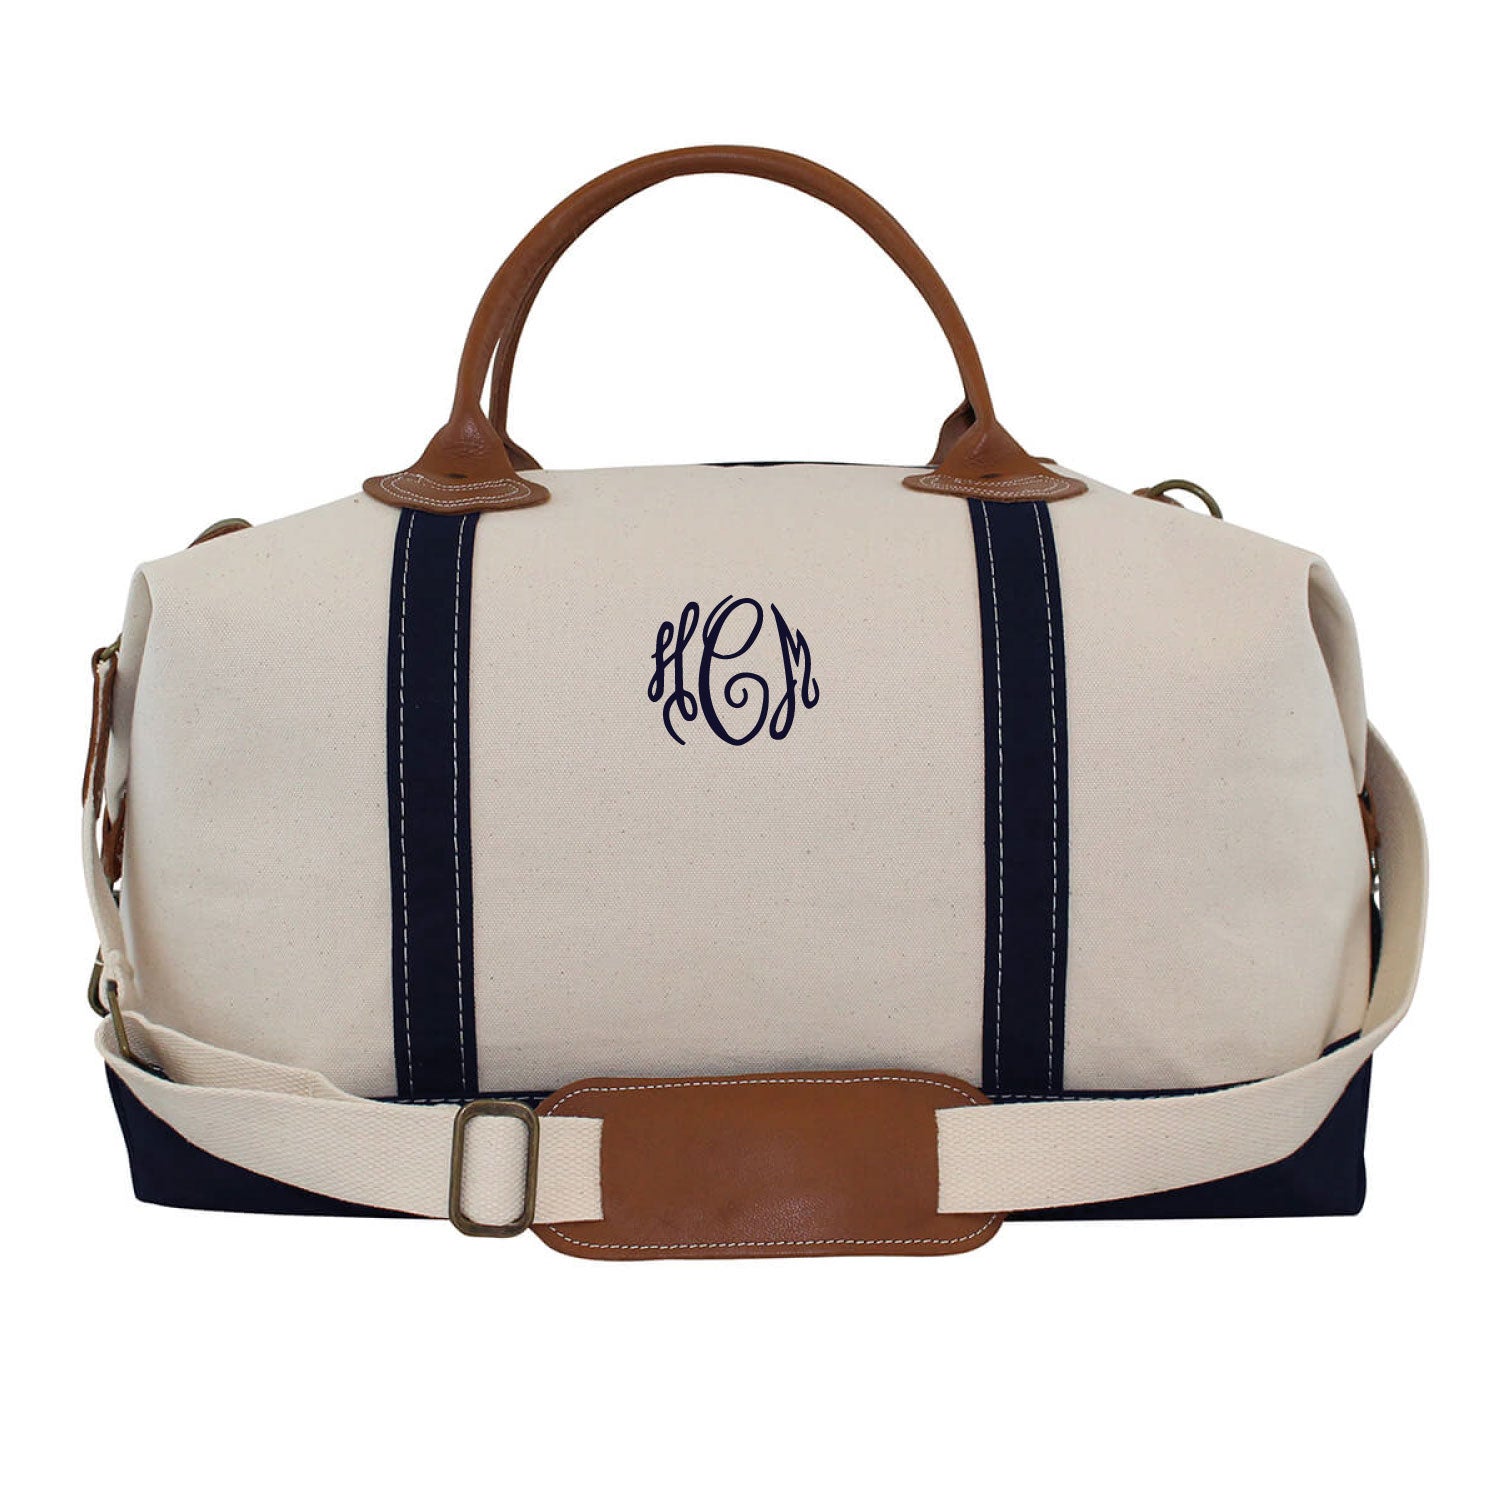 The Monogrammed Duffle Bag